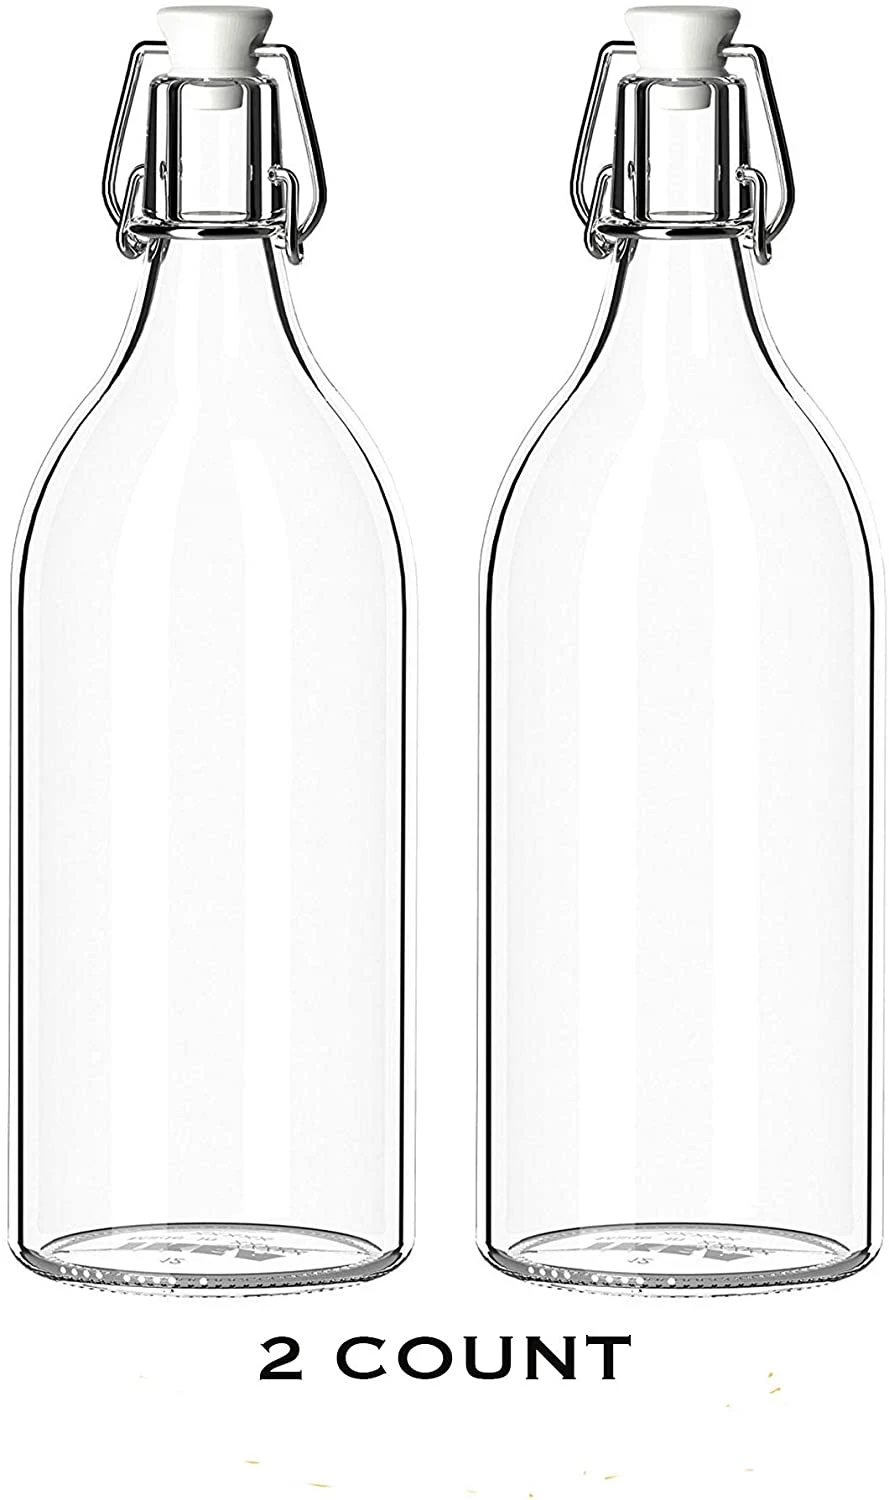 Clear Glass Bottle with Stopper, Swing Top Bottles for Oil, Vinegar, Beverages, Beer, Water, Kombucha